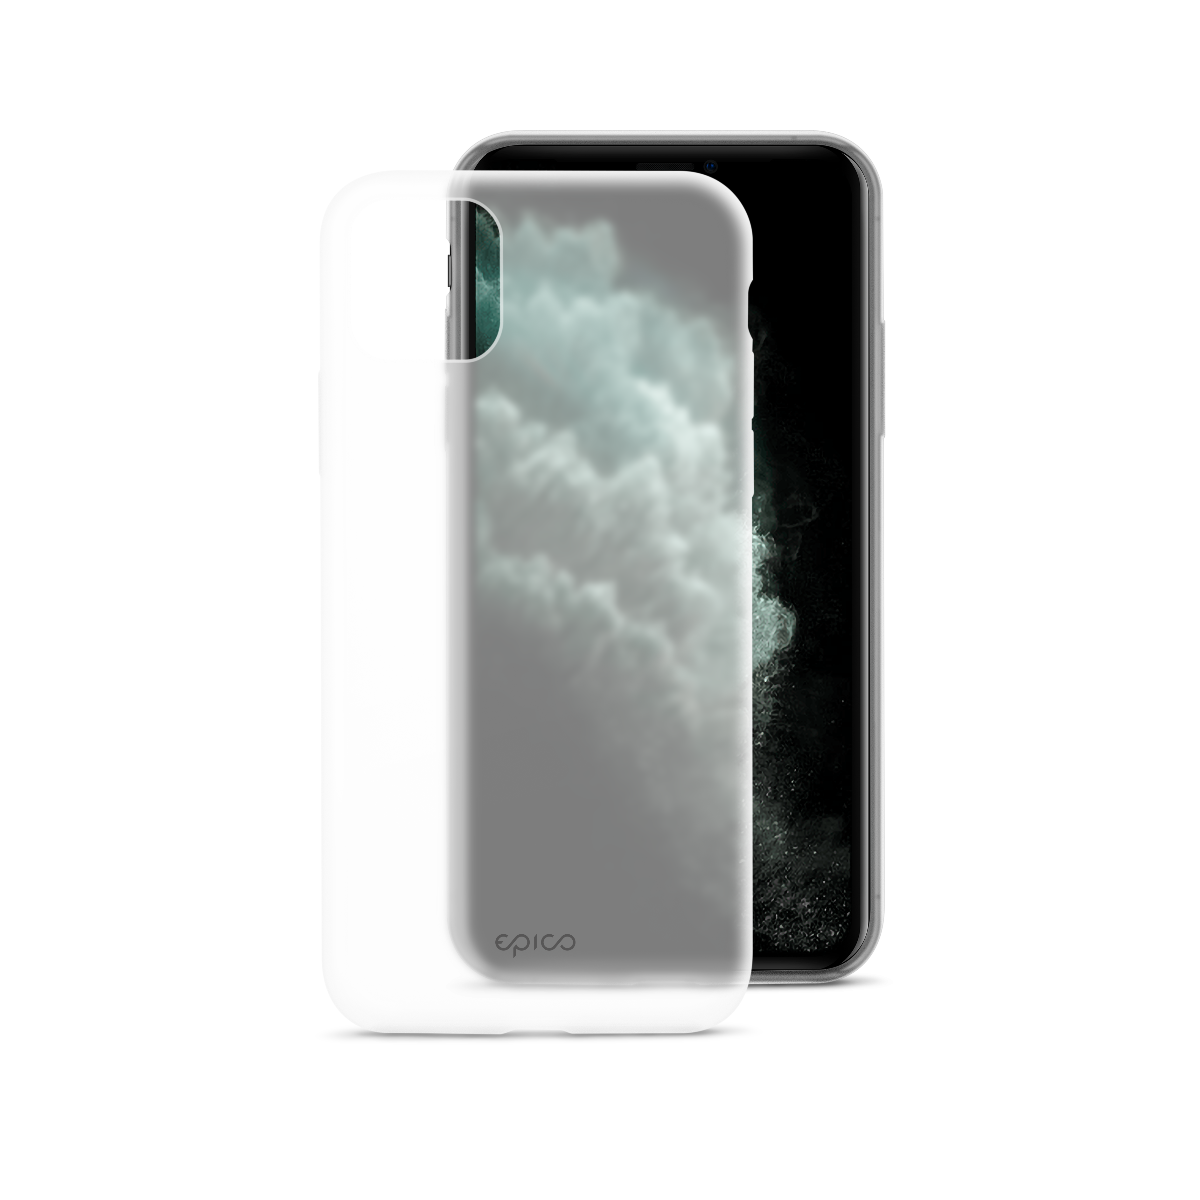 Epico Silicone Case for iPhone 11 Pro Max - transparent white